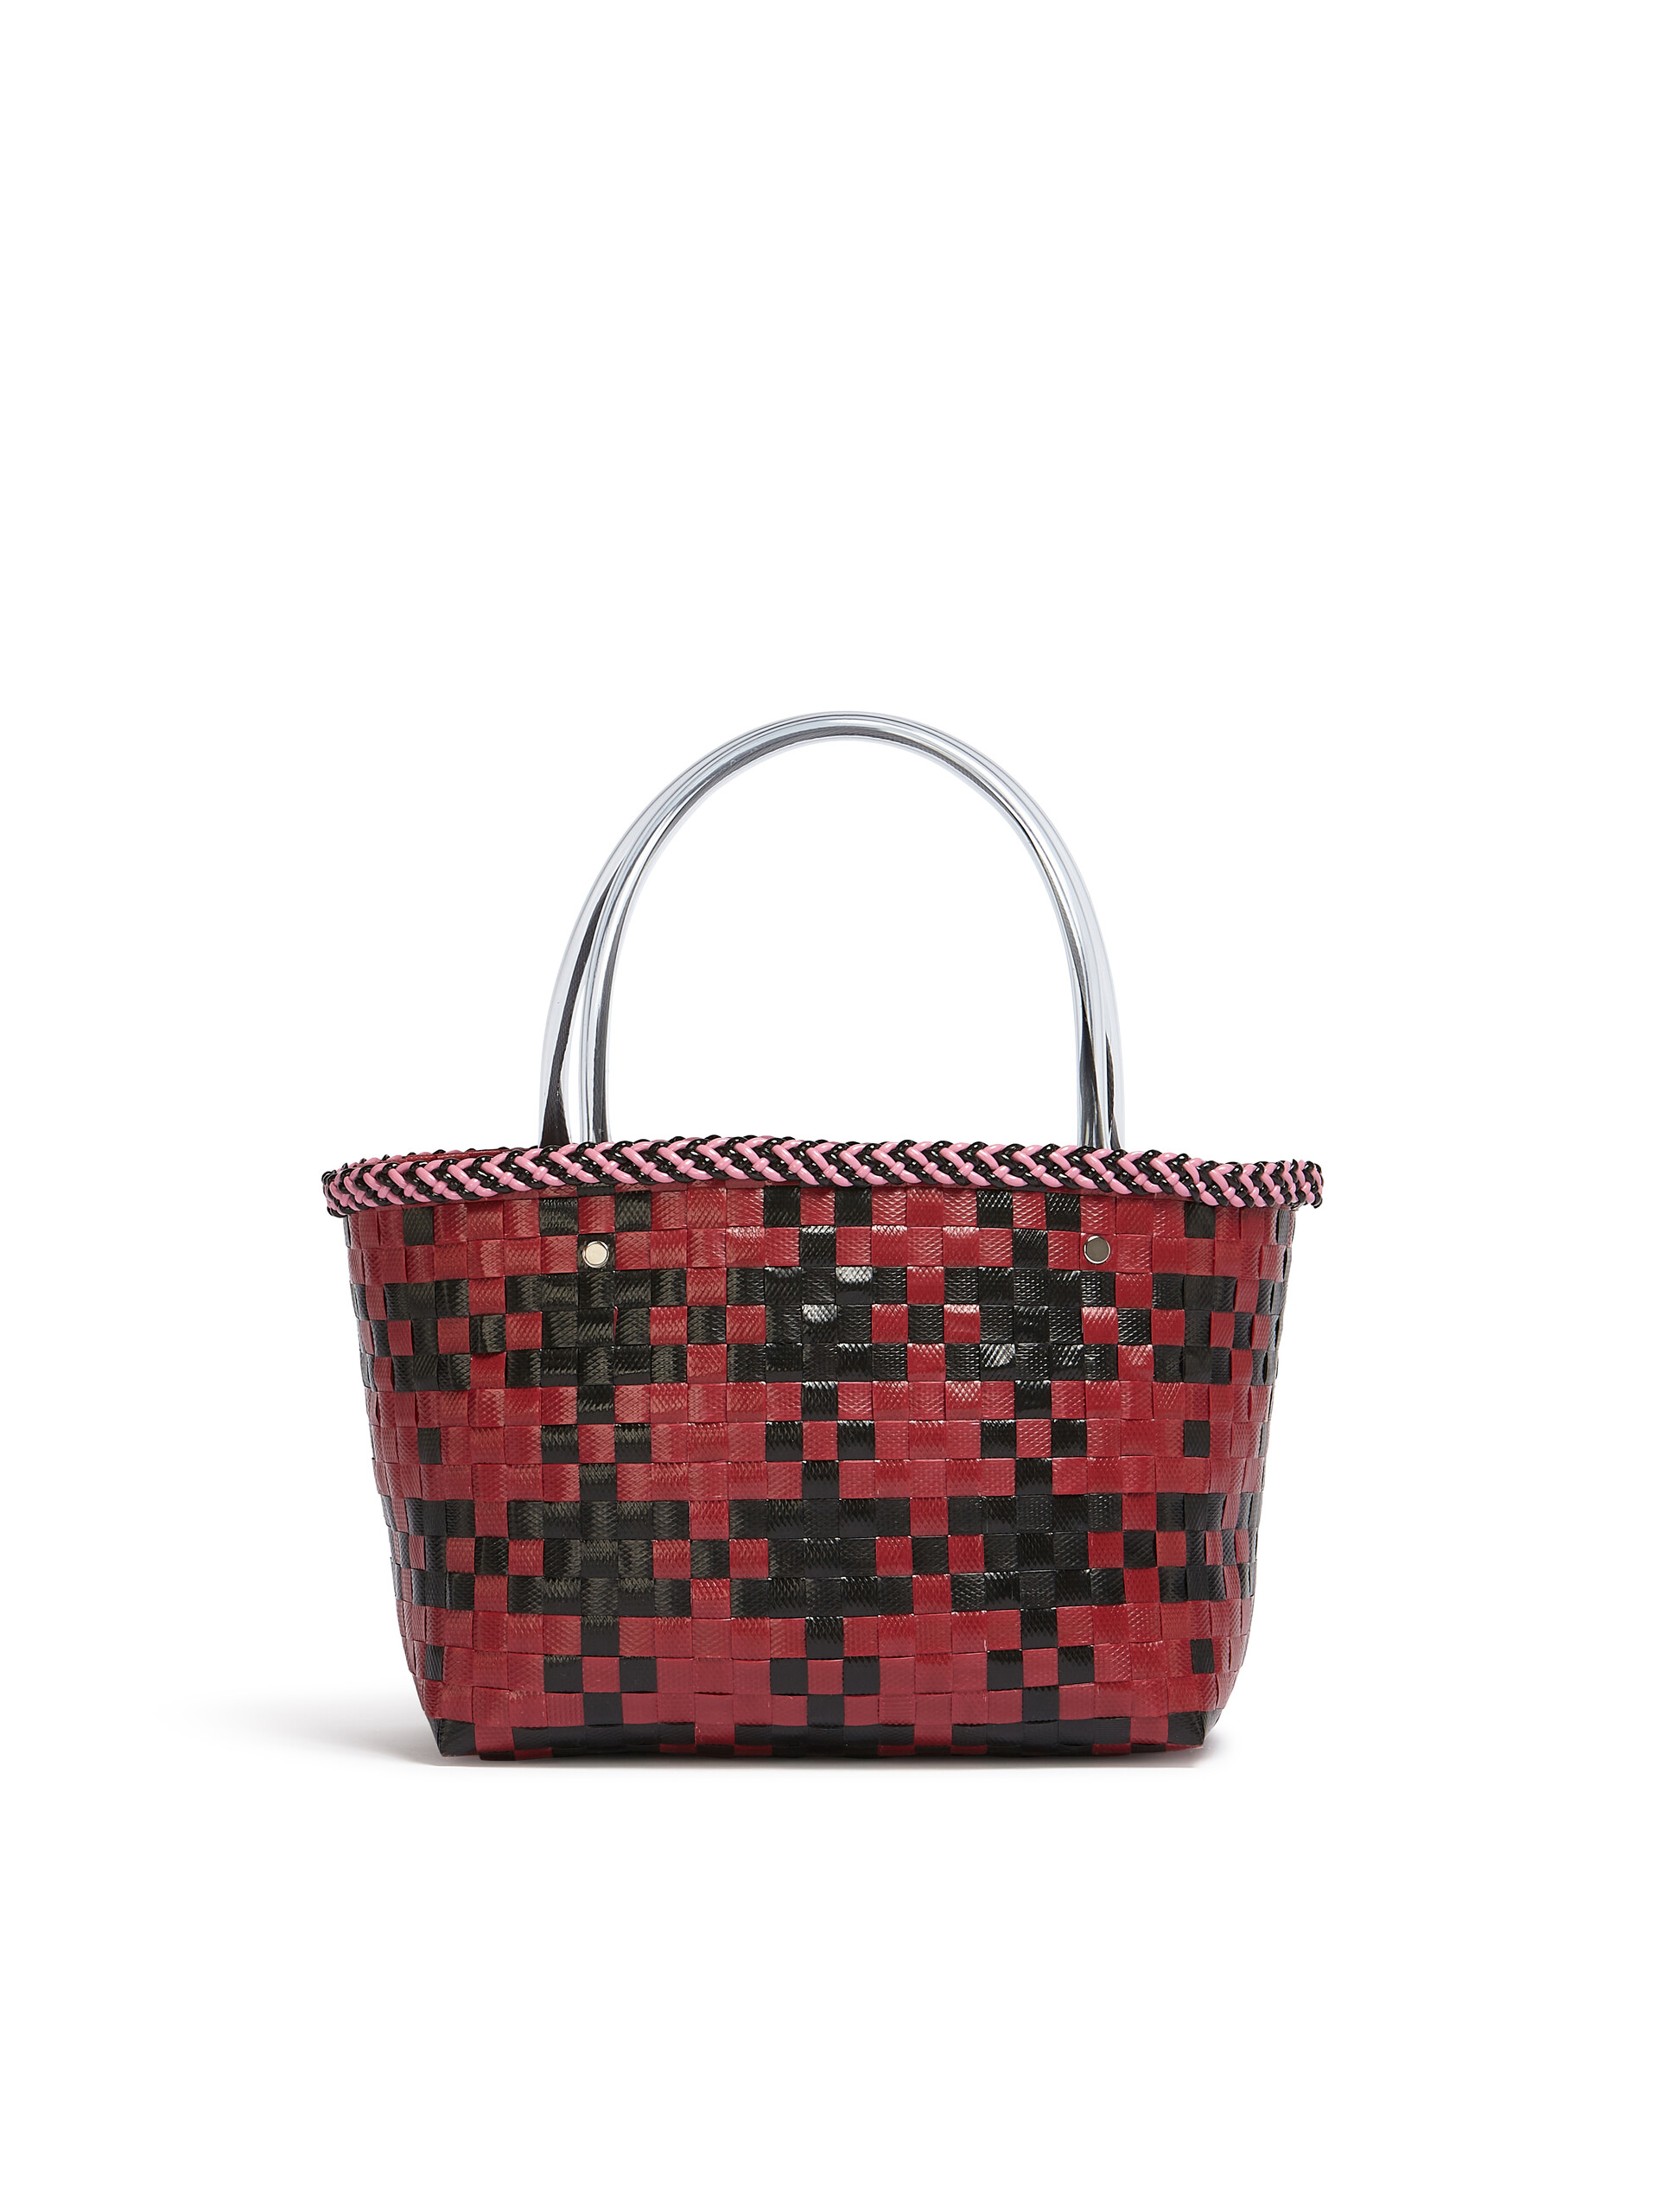 MARNI MARKET CHECK BAG in burgundy tartan woven material - Bags - Image 3